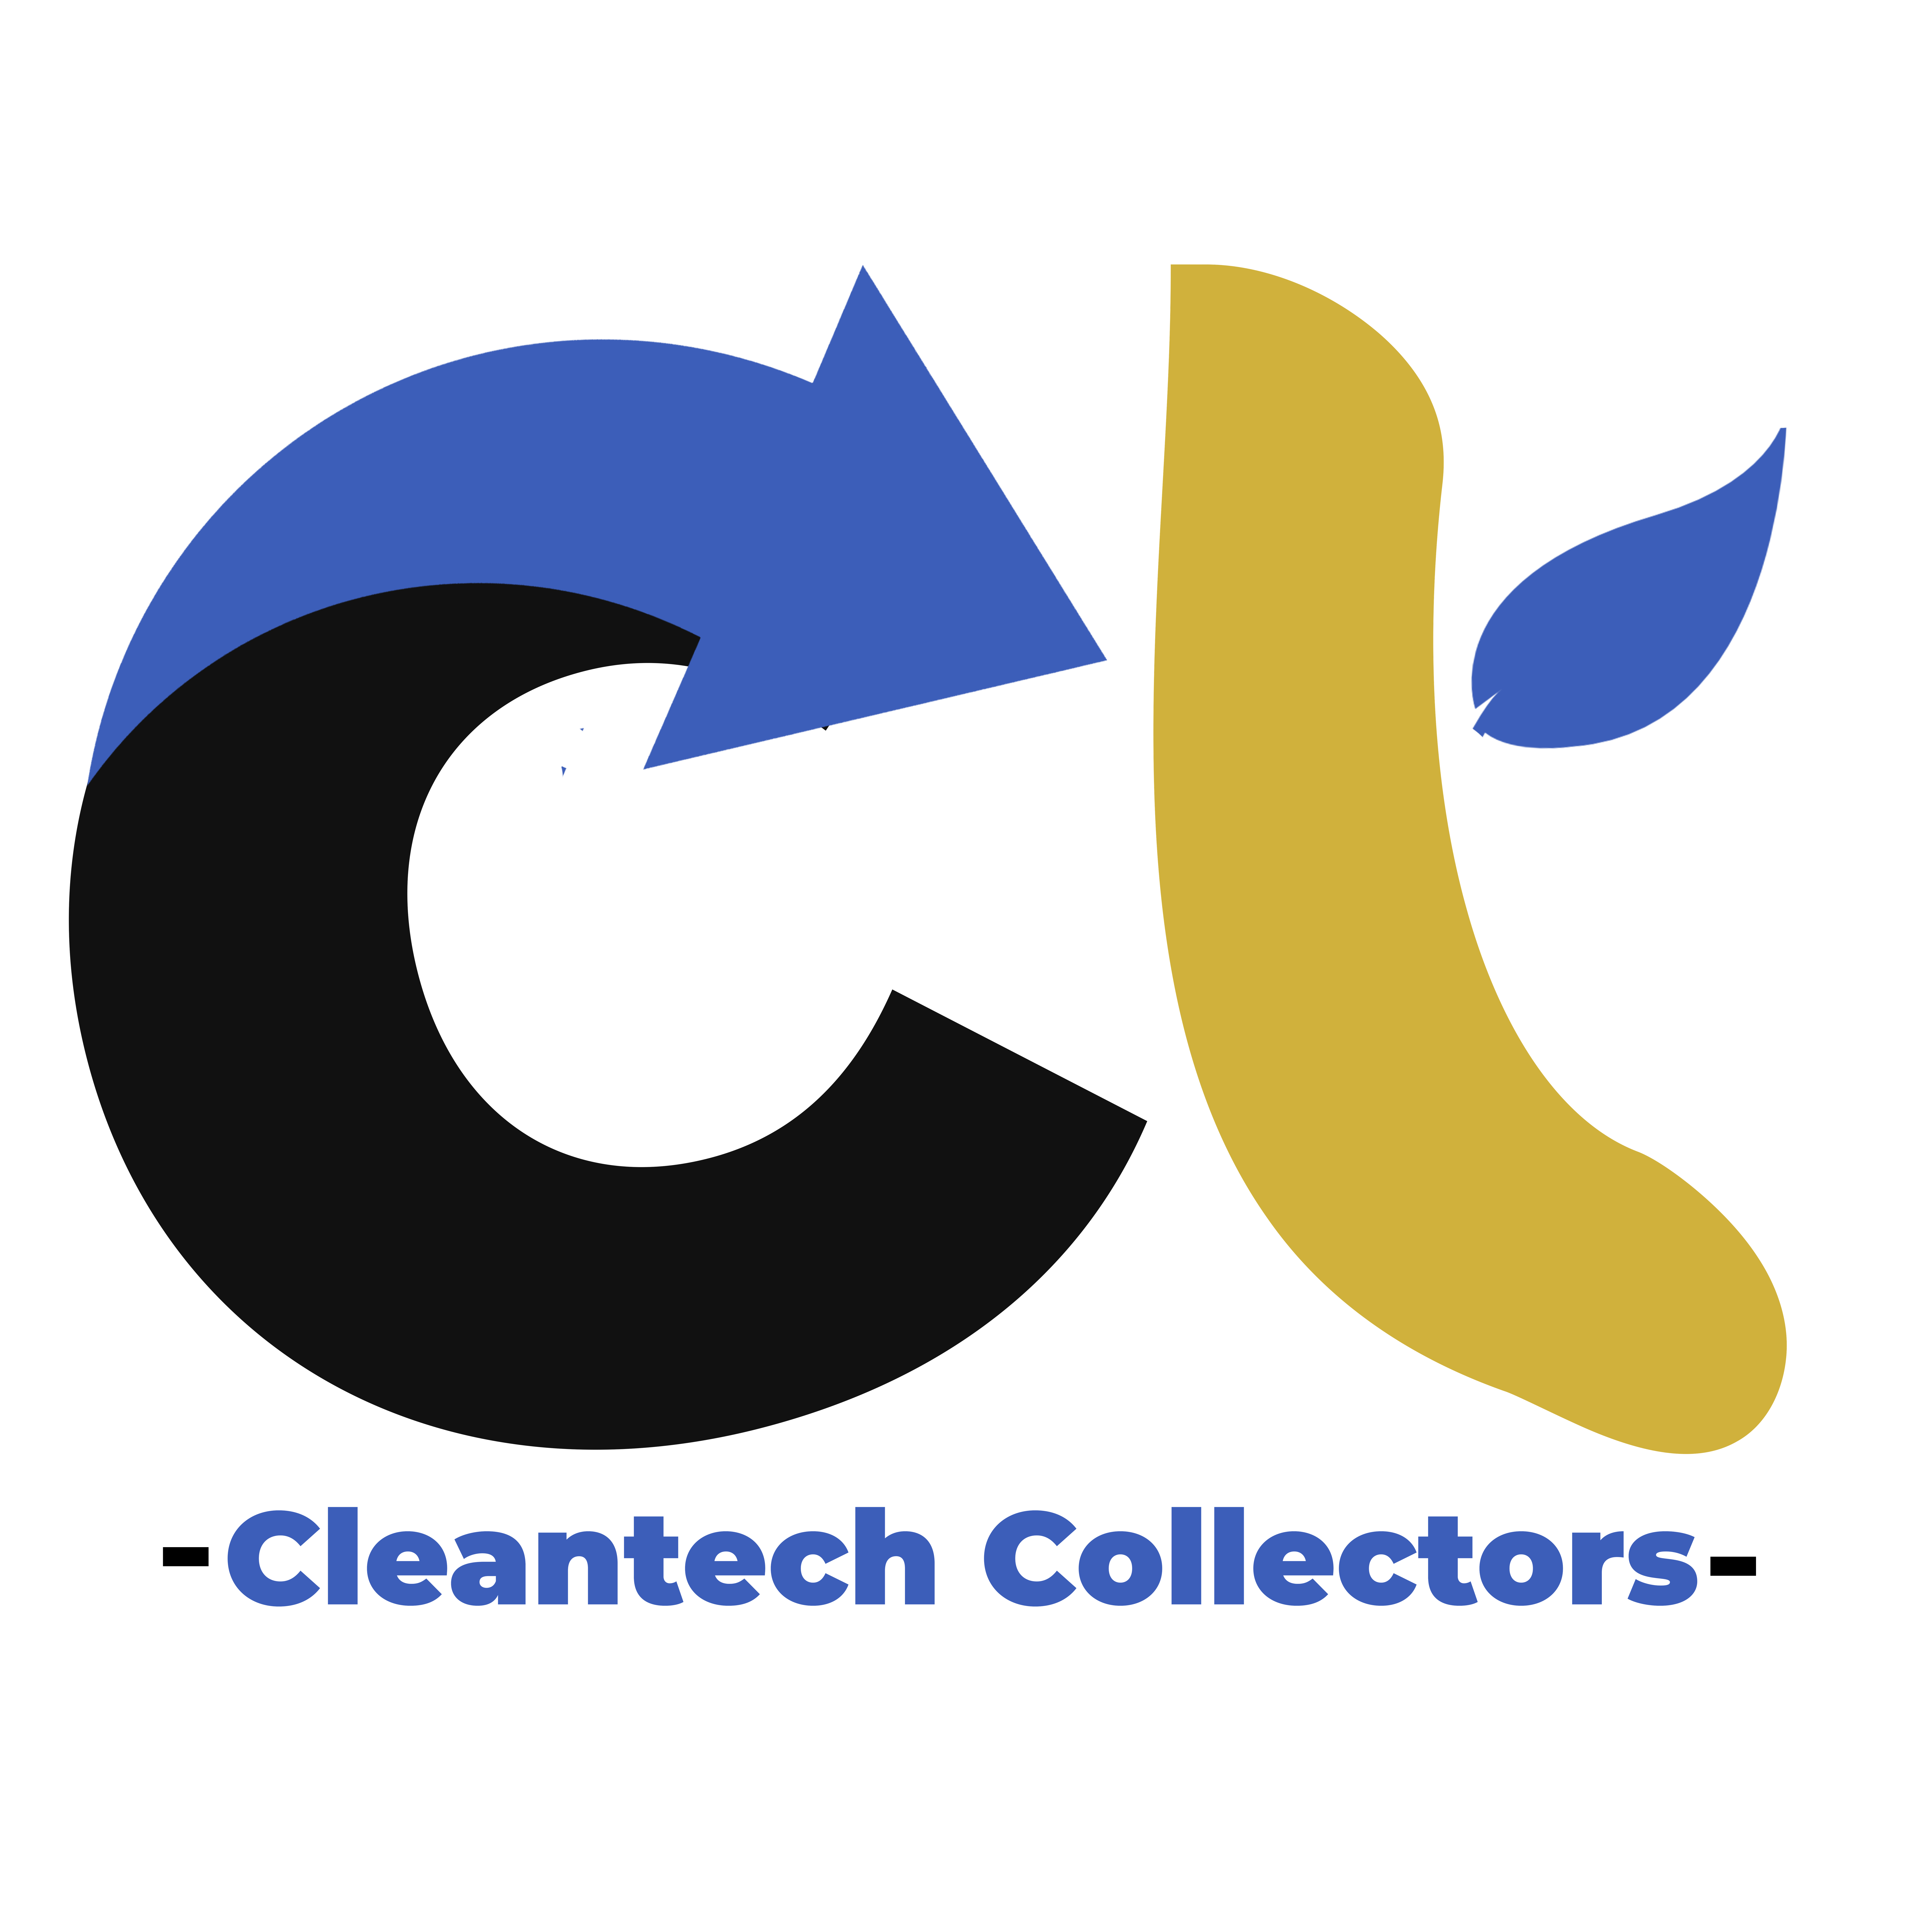 Clean Tech Collectors